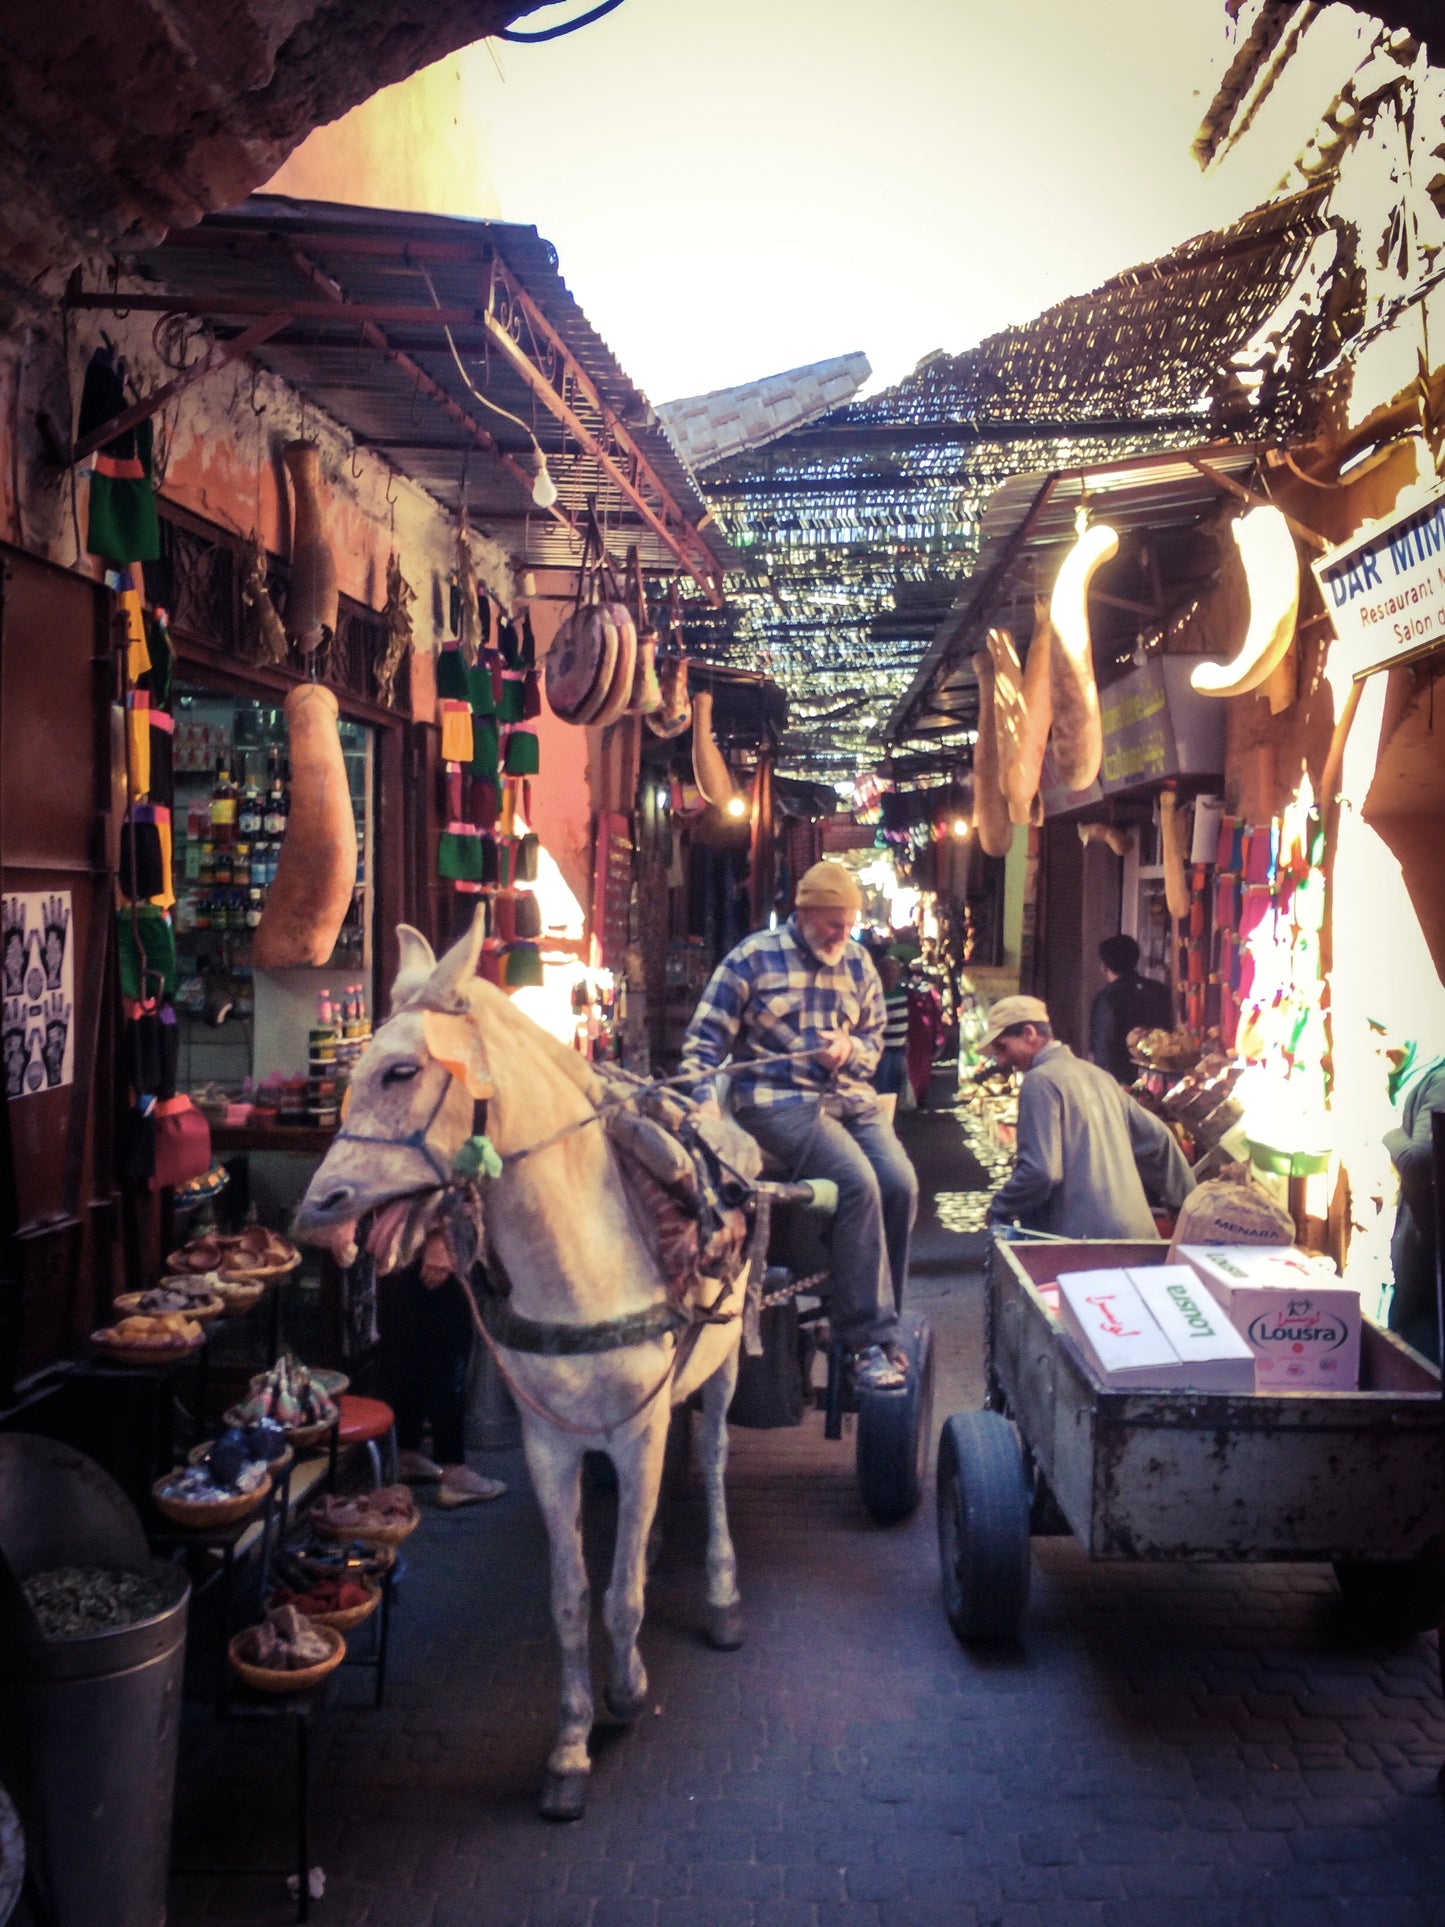 164 - Horse in Marrakesh, Morocco